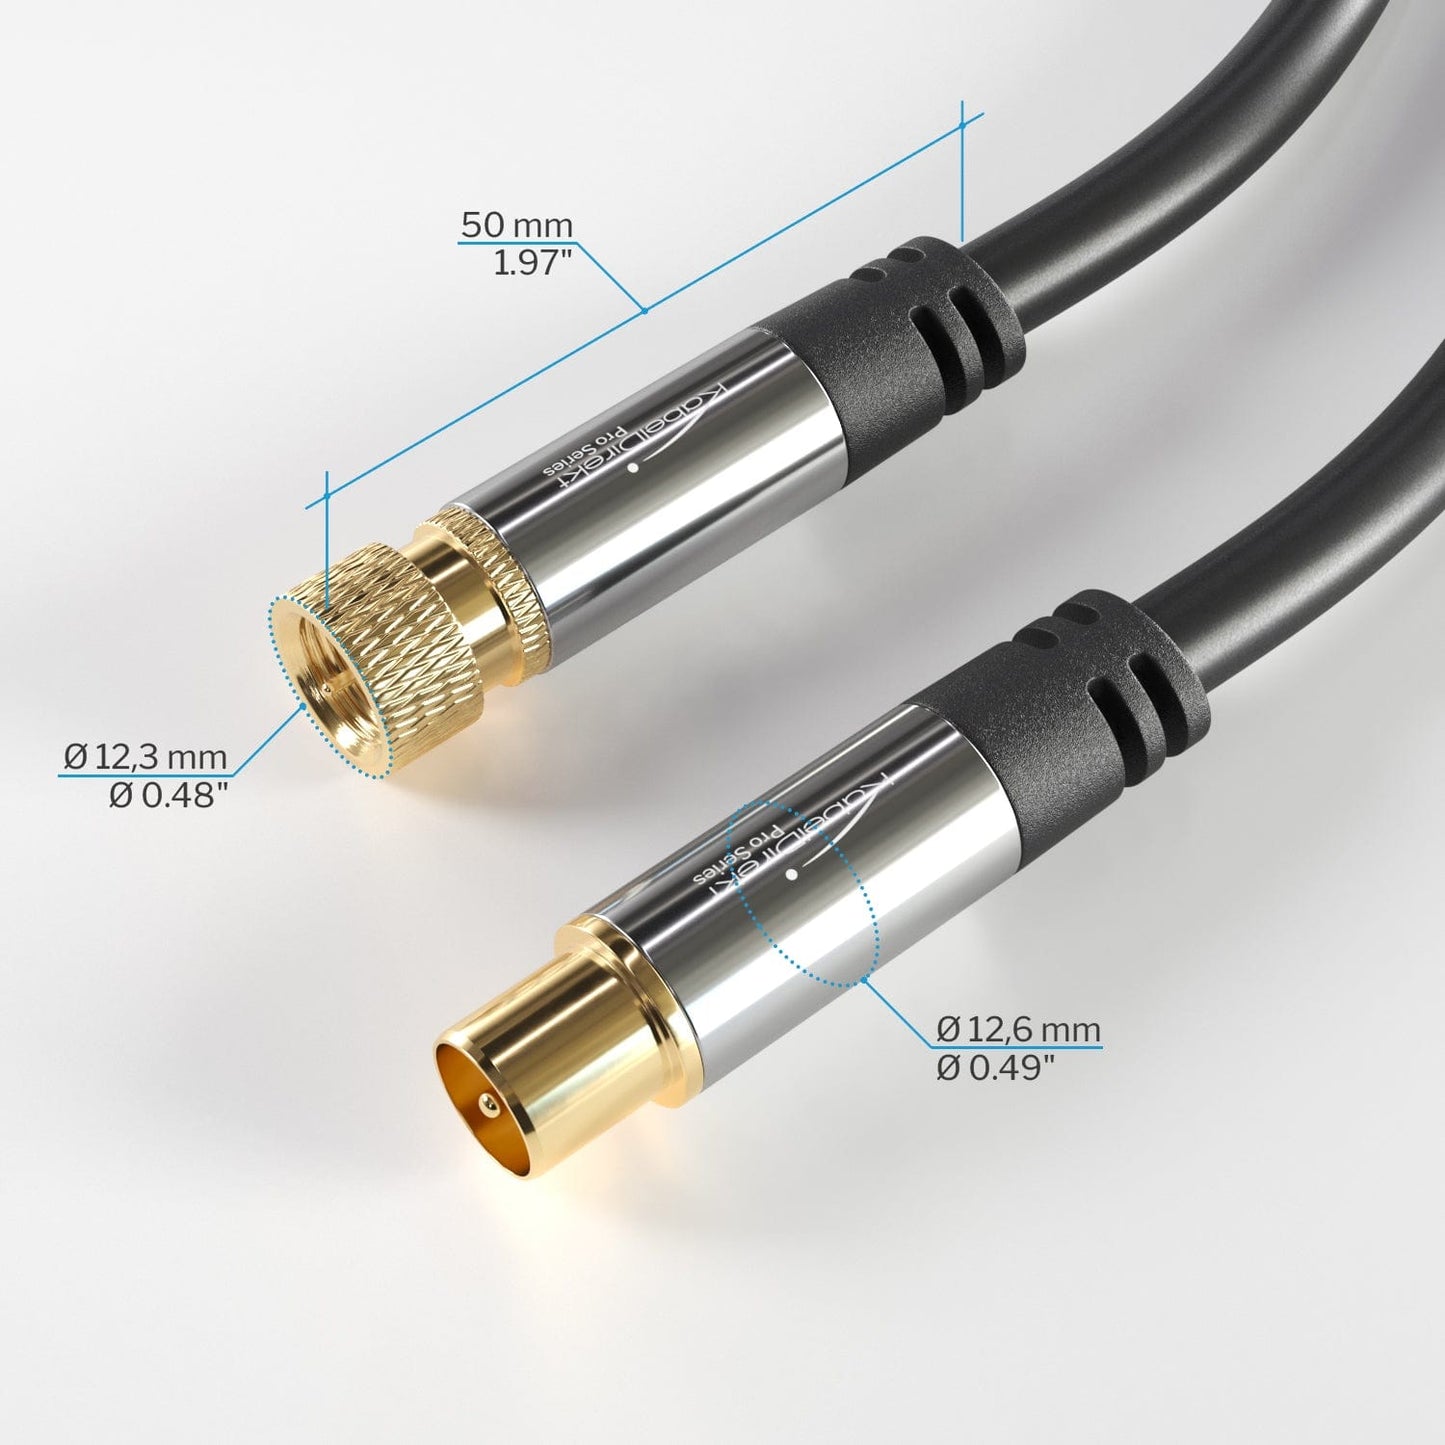 SAT/TV cable - F connector, 75 Ohm - coaxial cable suitable for TV, HDTV, radio, DVB-T, DVB-C, DVB-S, DVB-S2